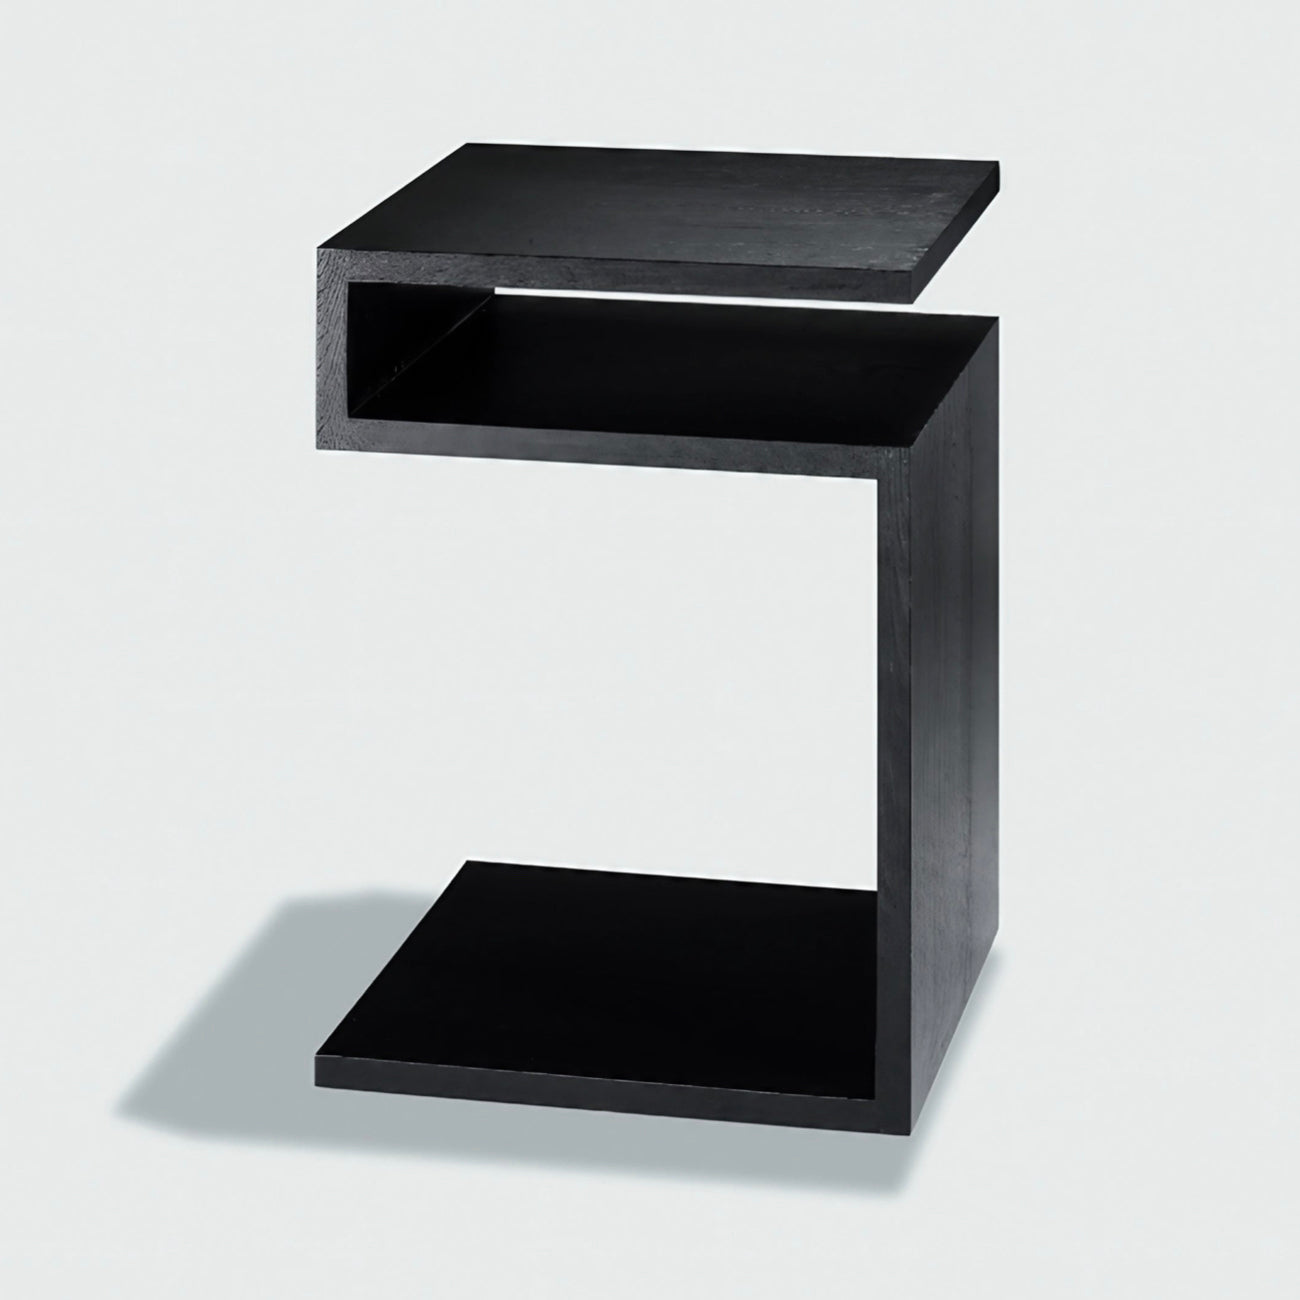 DEPOSITO BLACK table by Lambert